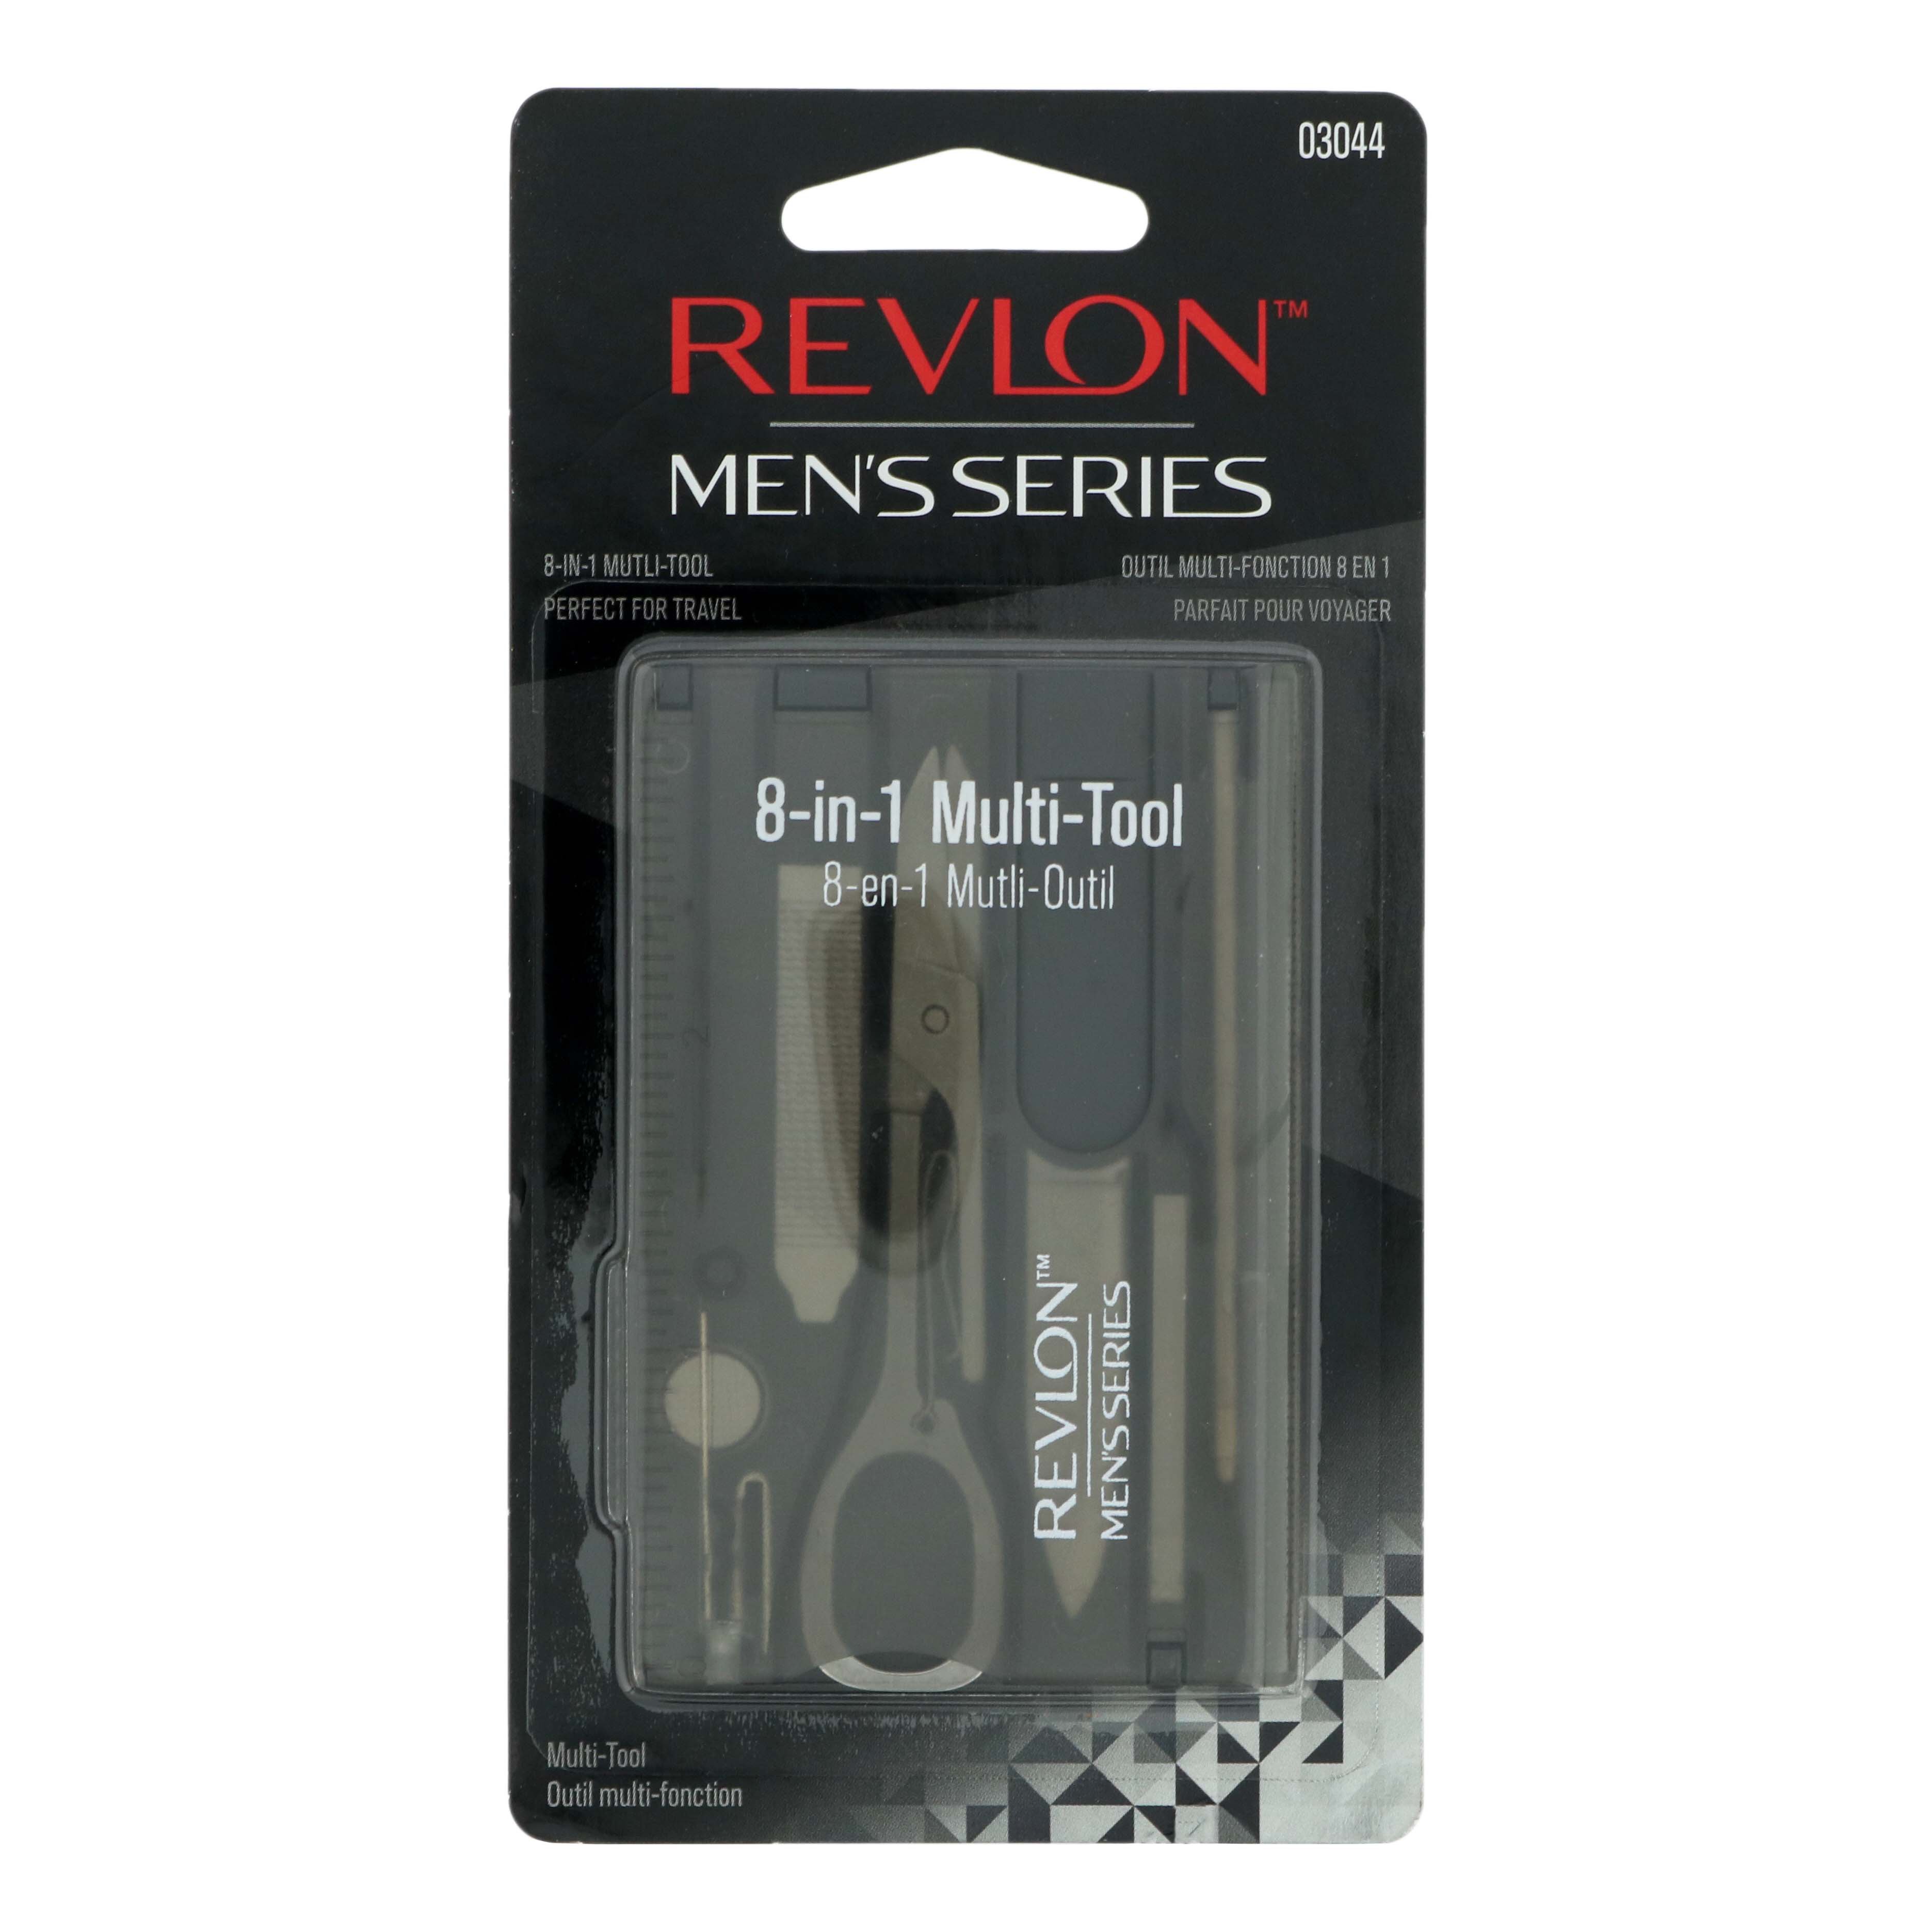 Revlon Men's Series 8-In-1 Multi-Tool - Shop Nails at H-E-B